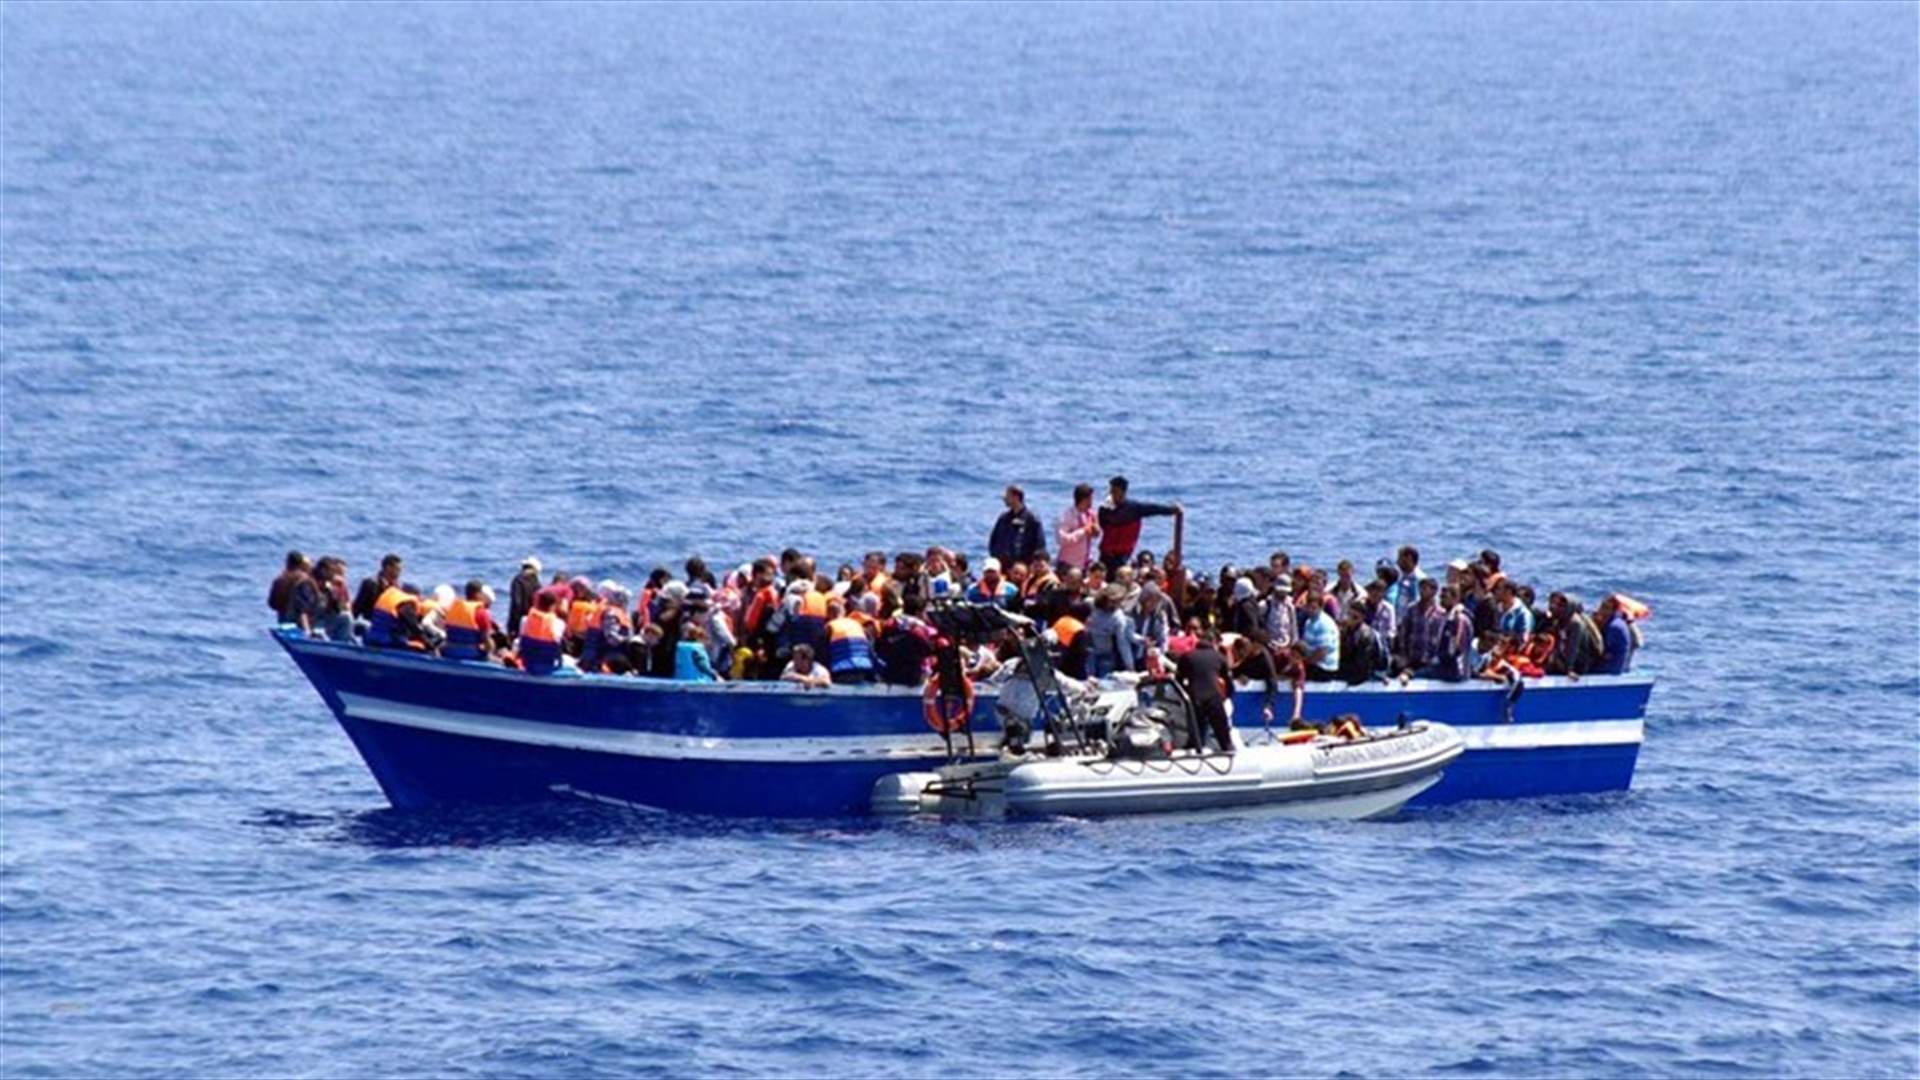 Ship carrying migrants sinks off Turkish coast, kills 15 - coast guard